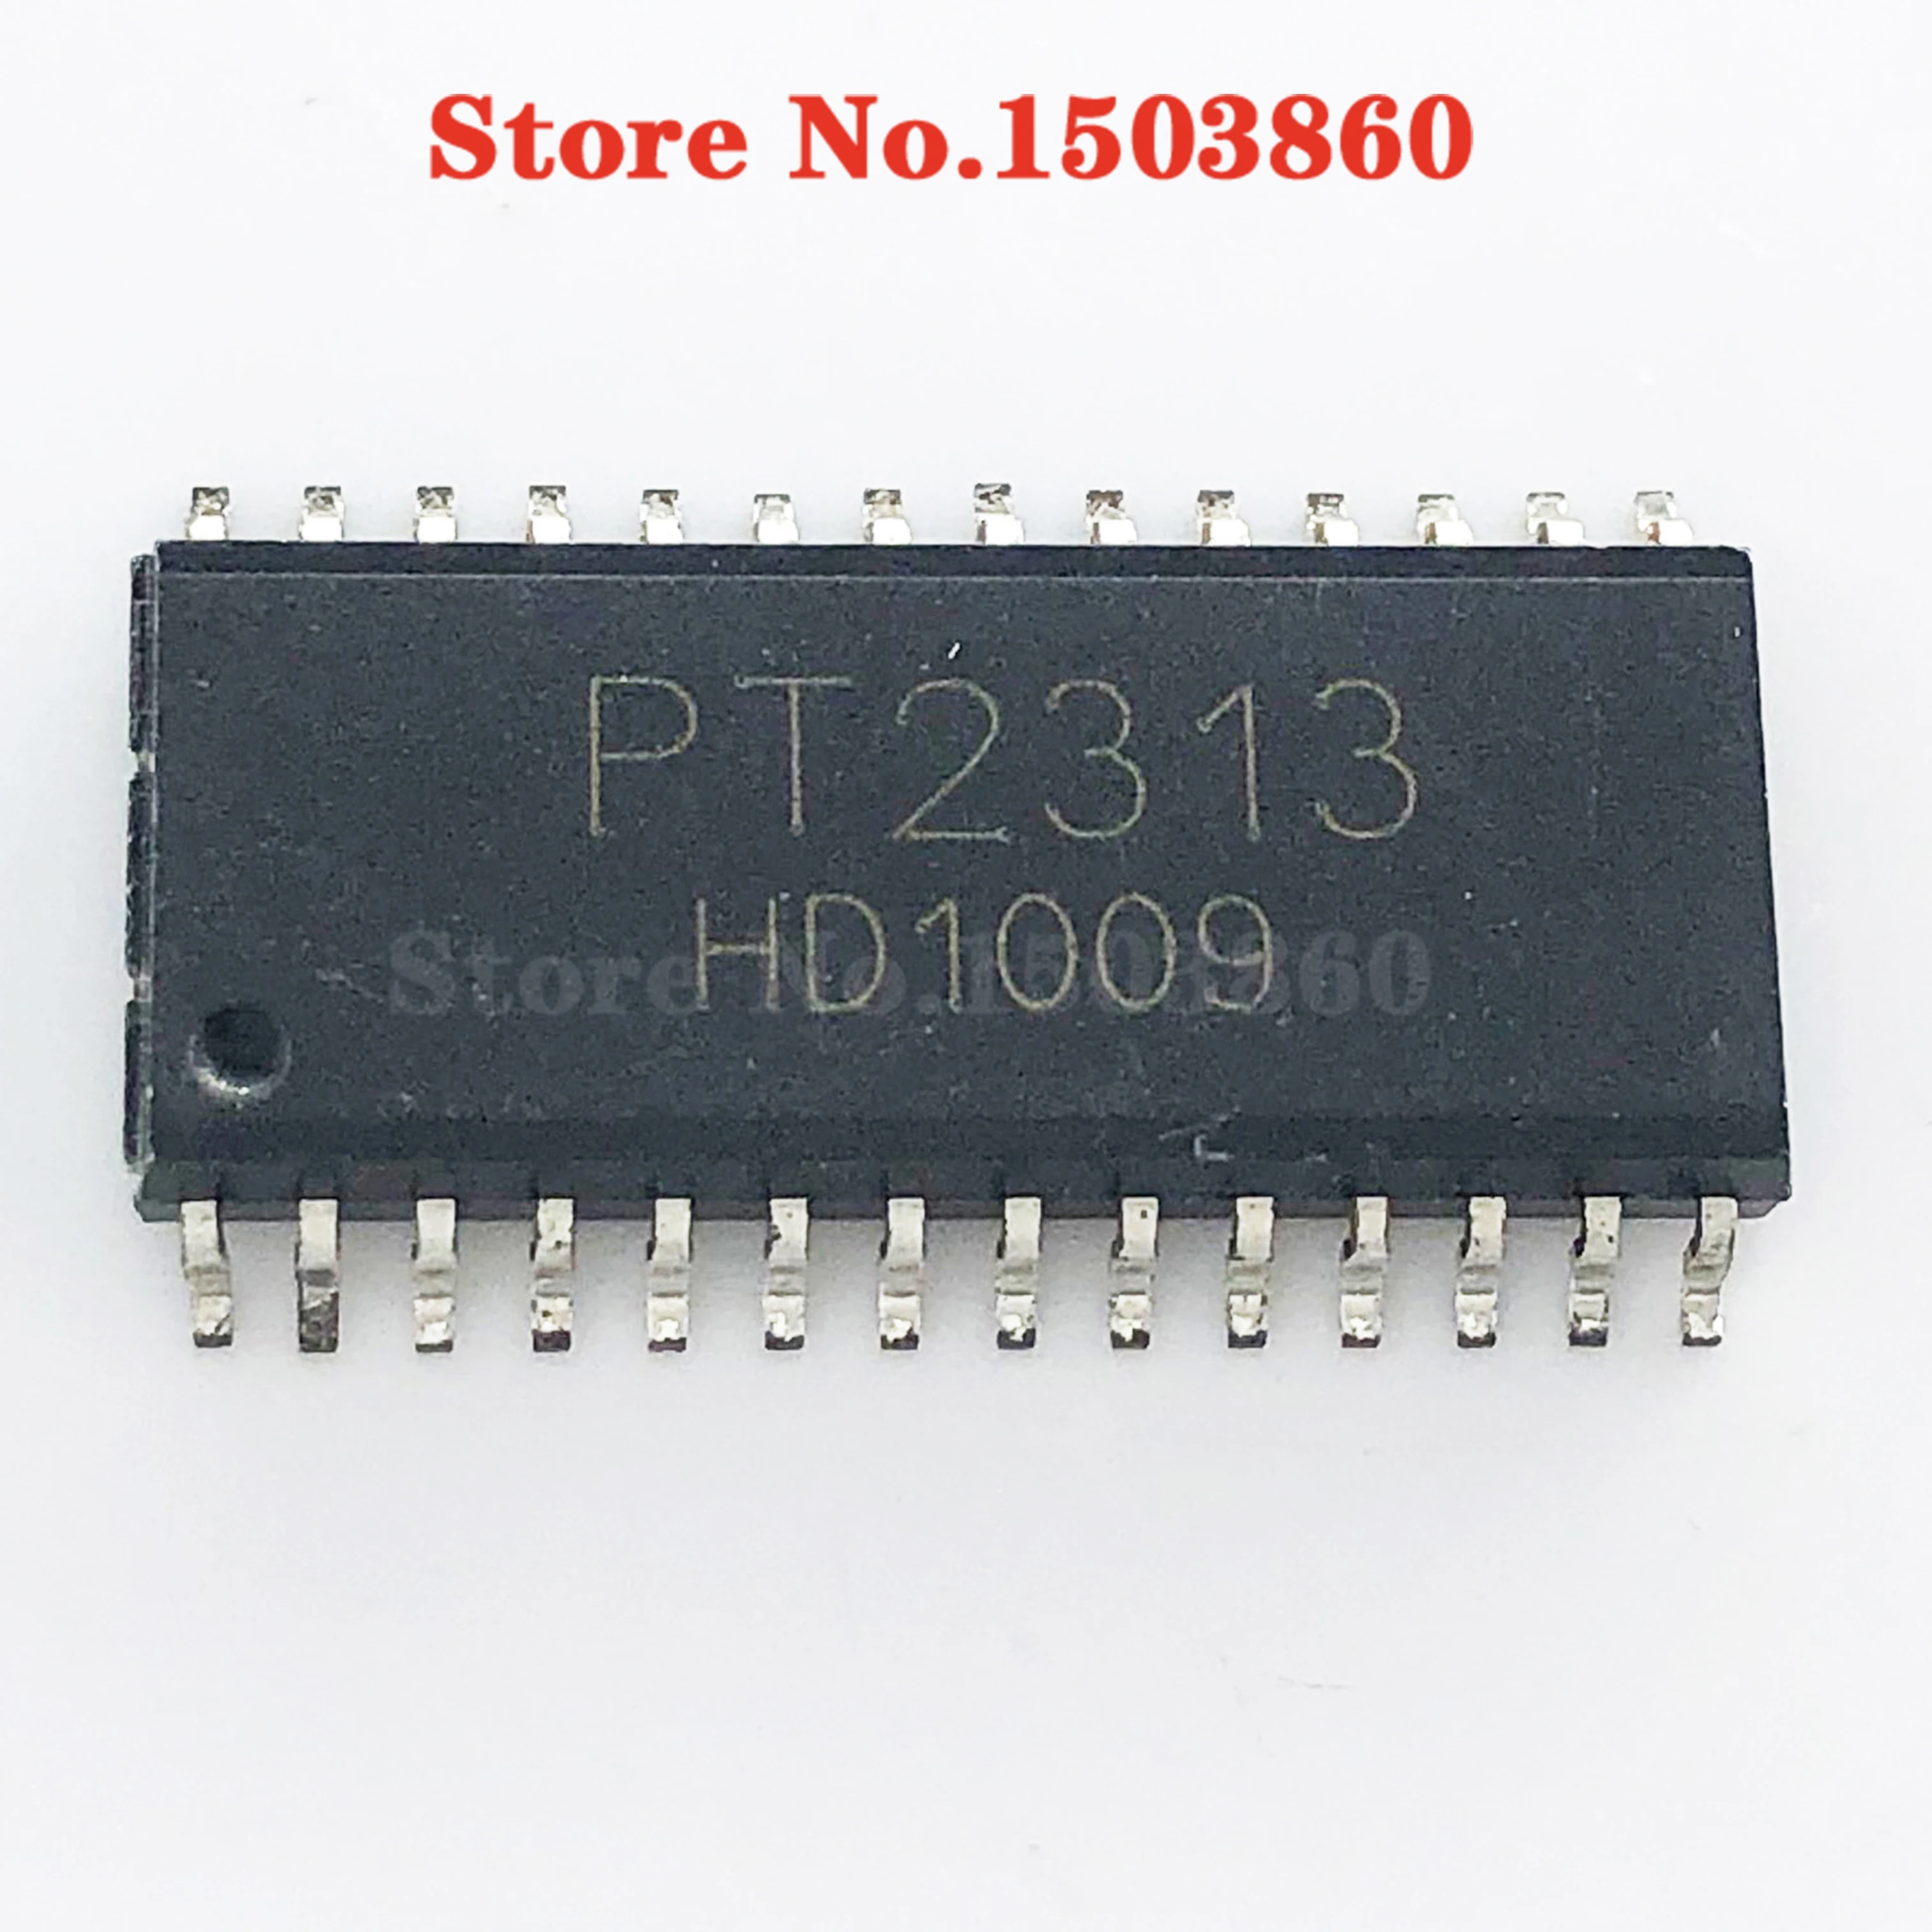 

1pcs/lot PT2313L PT2313 SOP-28 SMD 4-Channel Audio Processor IC new original In Stock